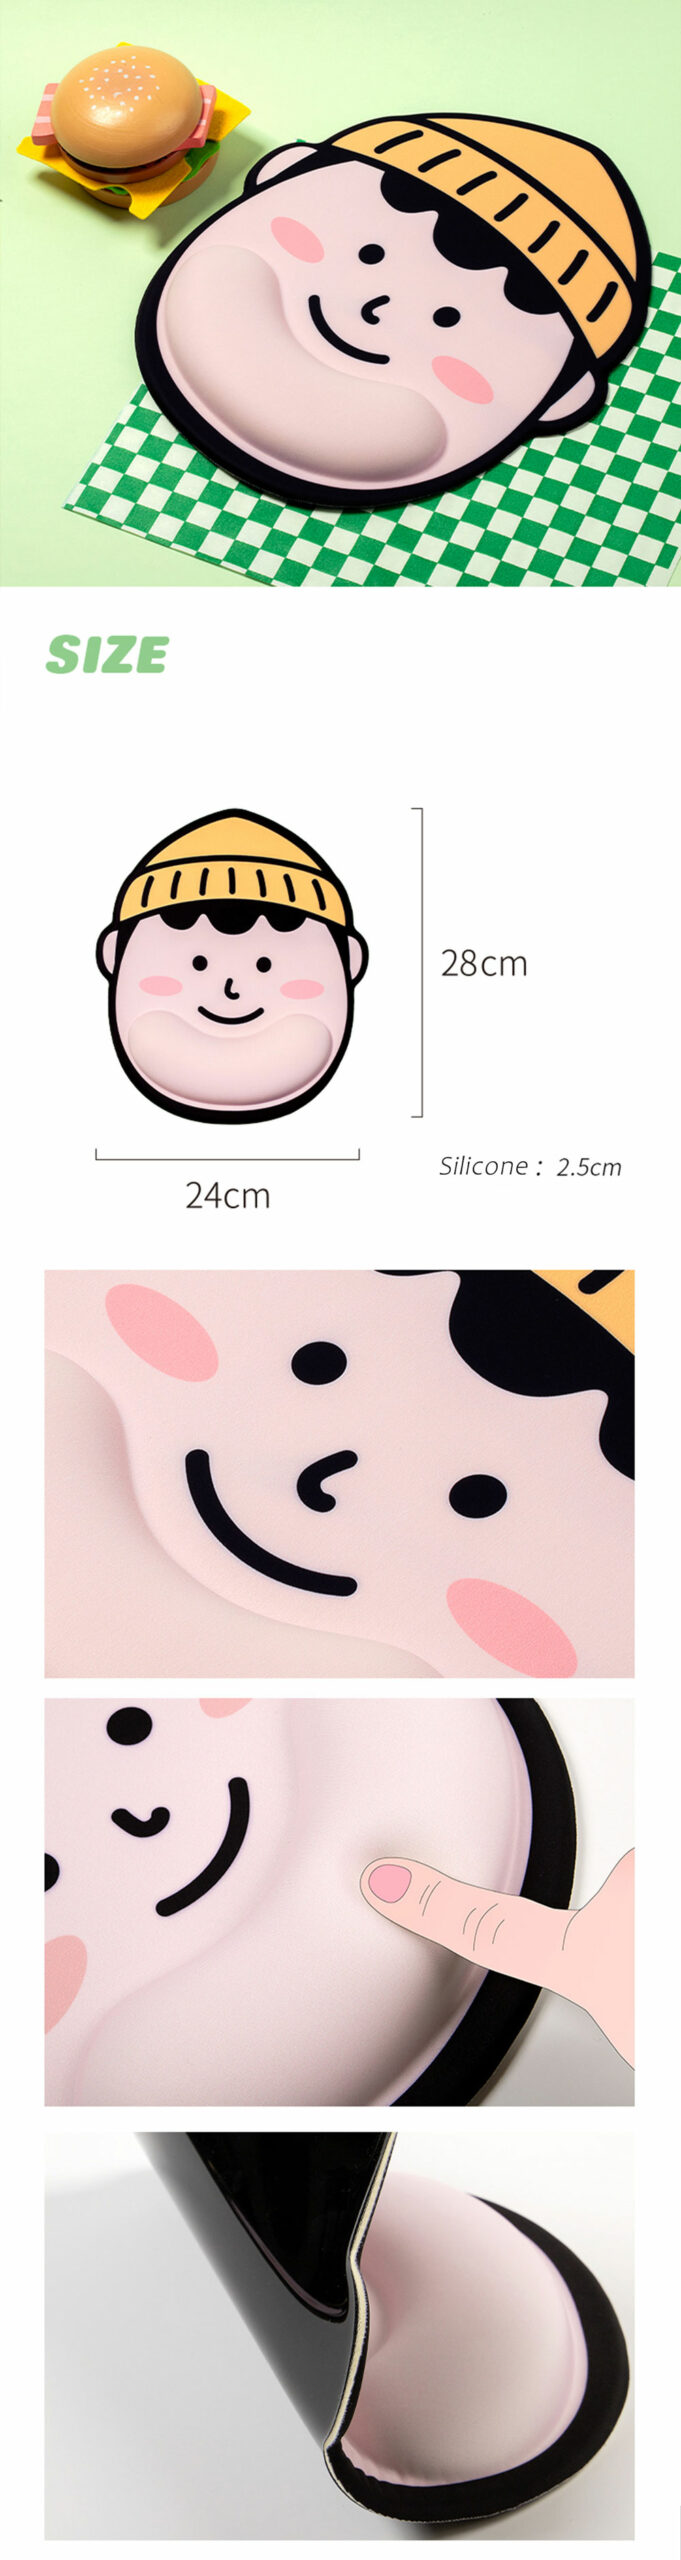 Cute 3D Mouse Pad Product Details 6